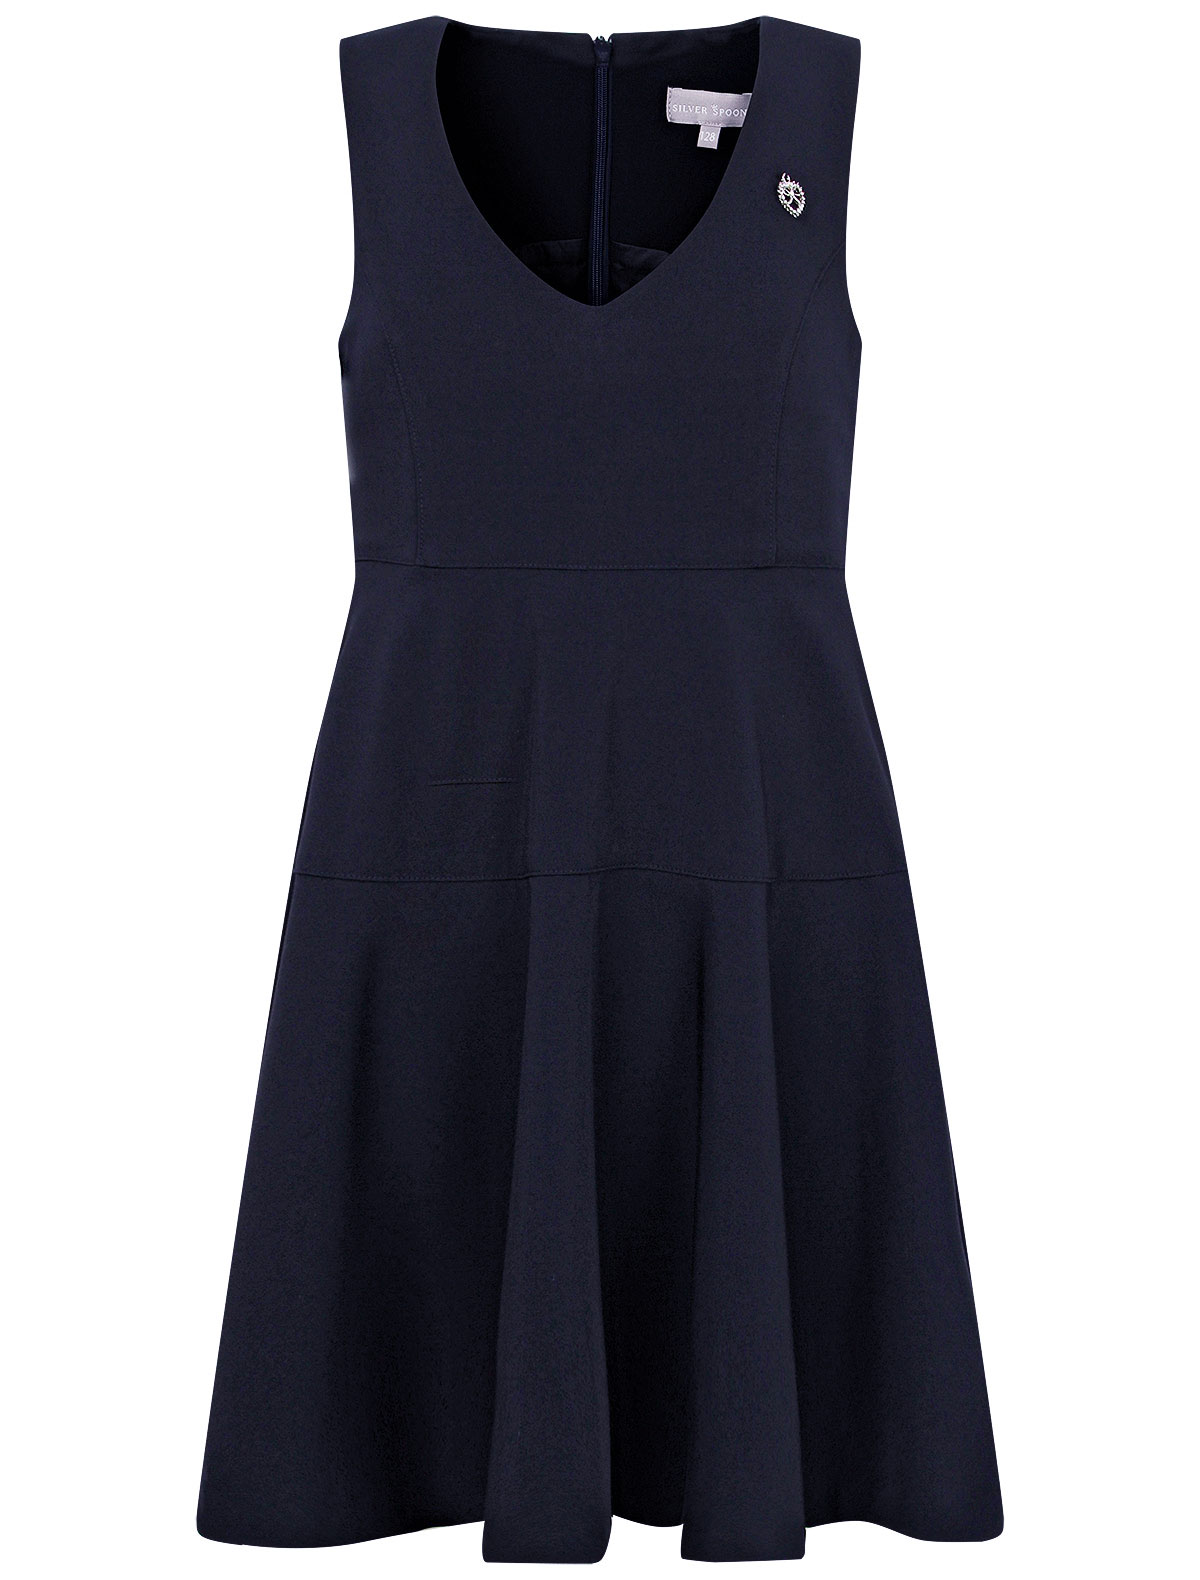 Платье SILVER SPOON 2220011, цвет синий, размер 11 1054509080154 - фото 1